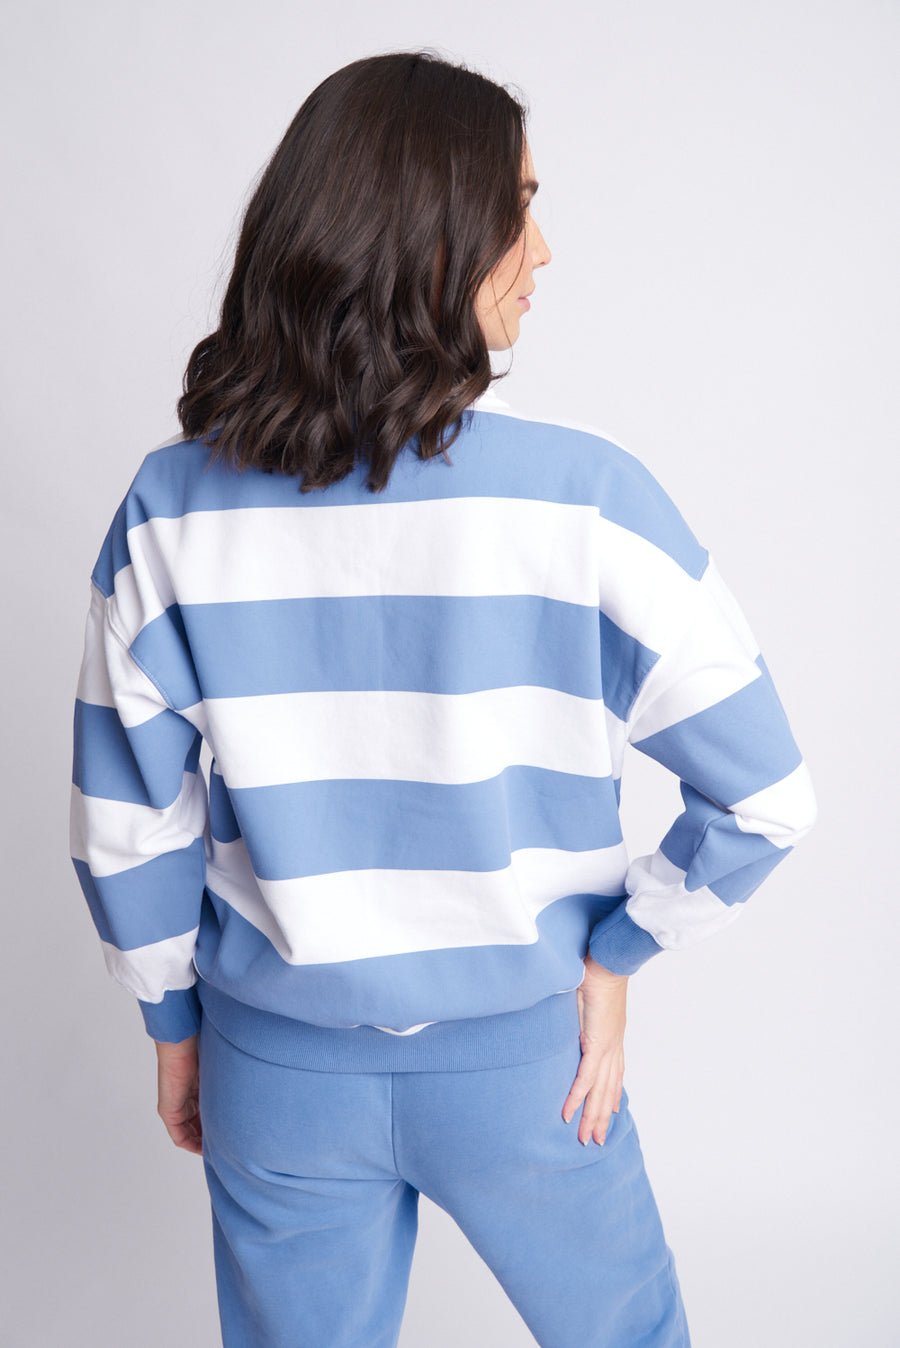 Cloth + Paper + Scissors - Fleece Stripe 1/2 Zip Sweater - Denim Blue/White